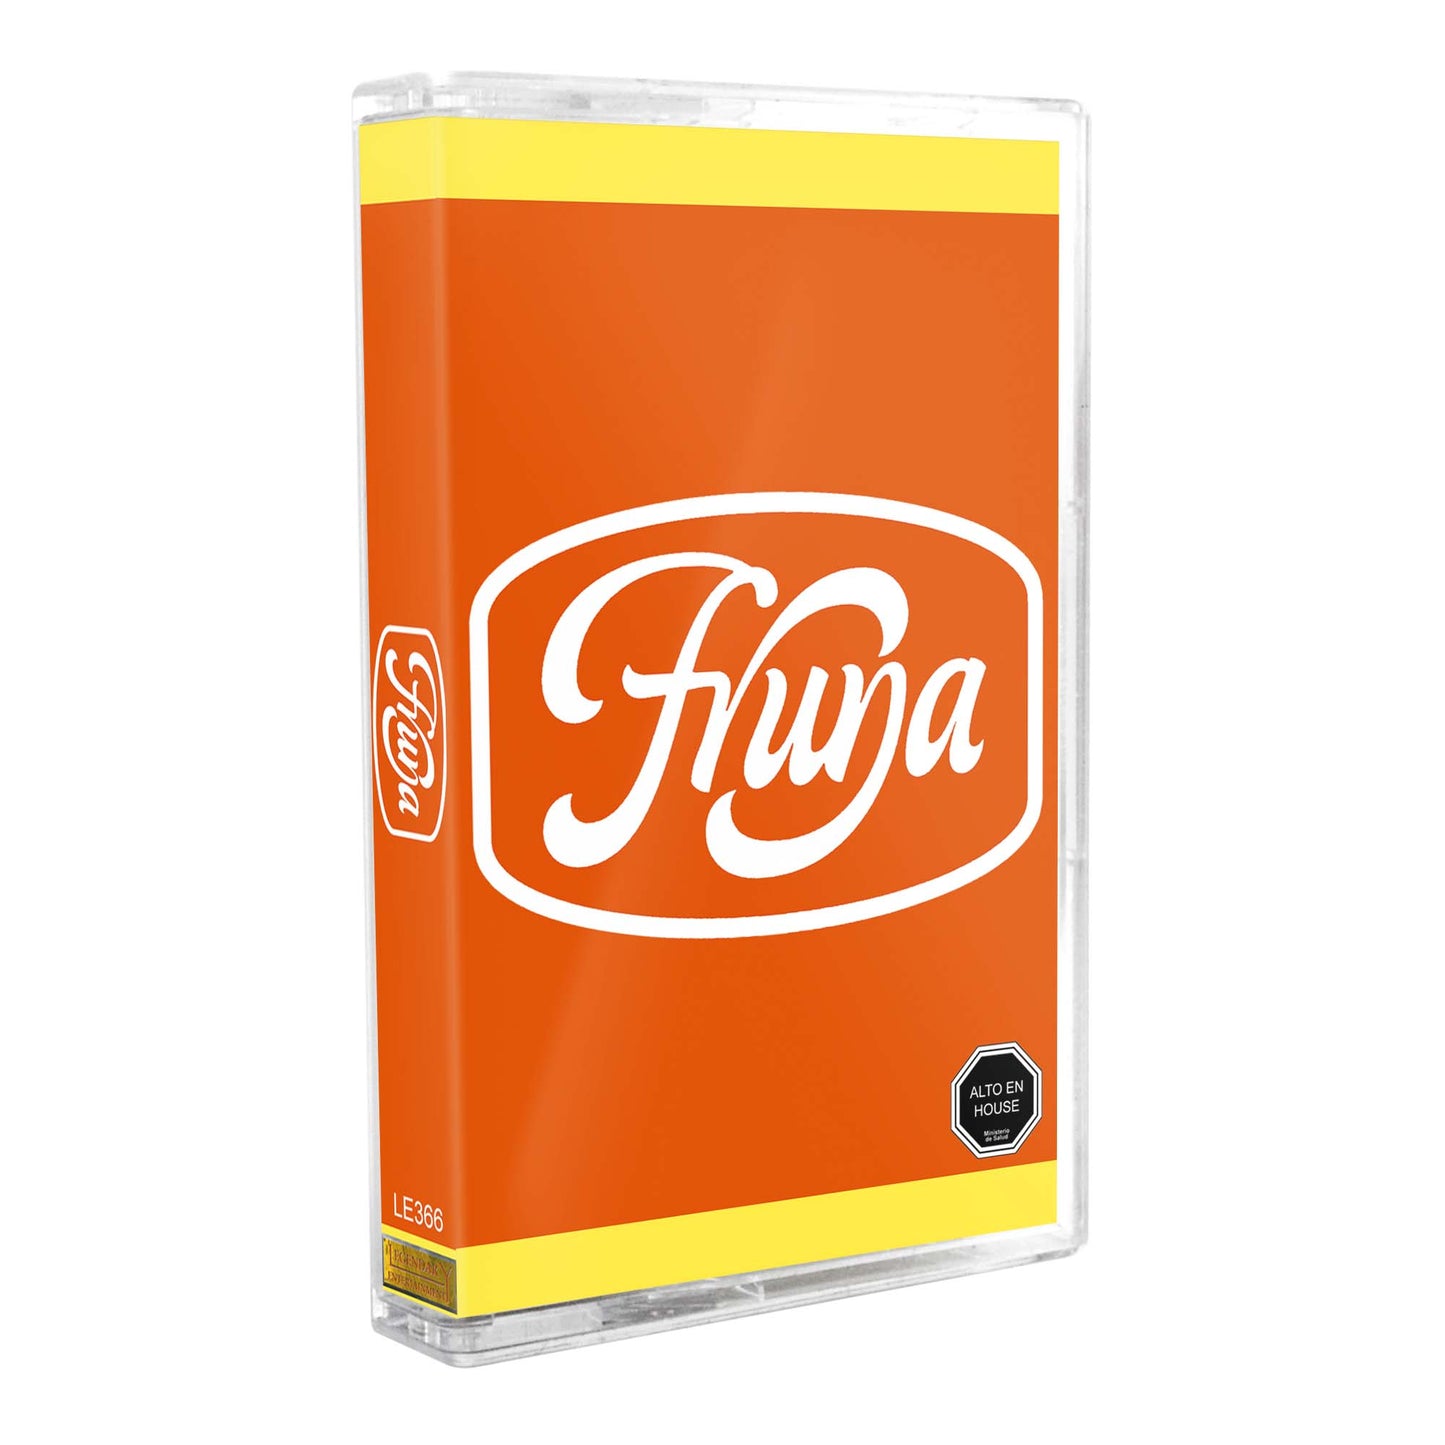 DJ Frucola - "Fruna" Limited Edition Cassette Tape